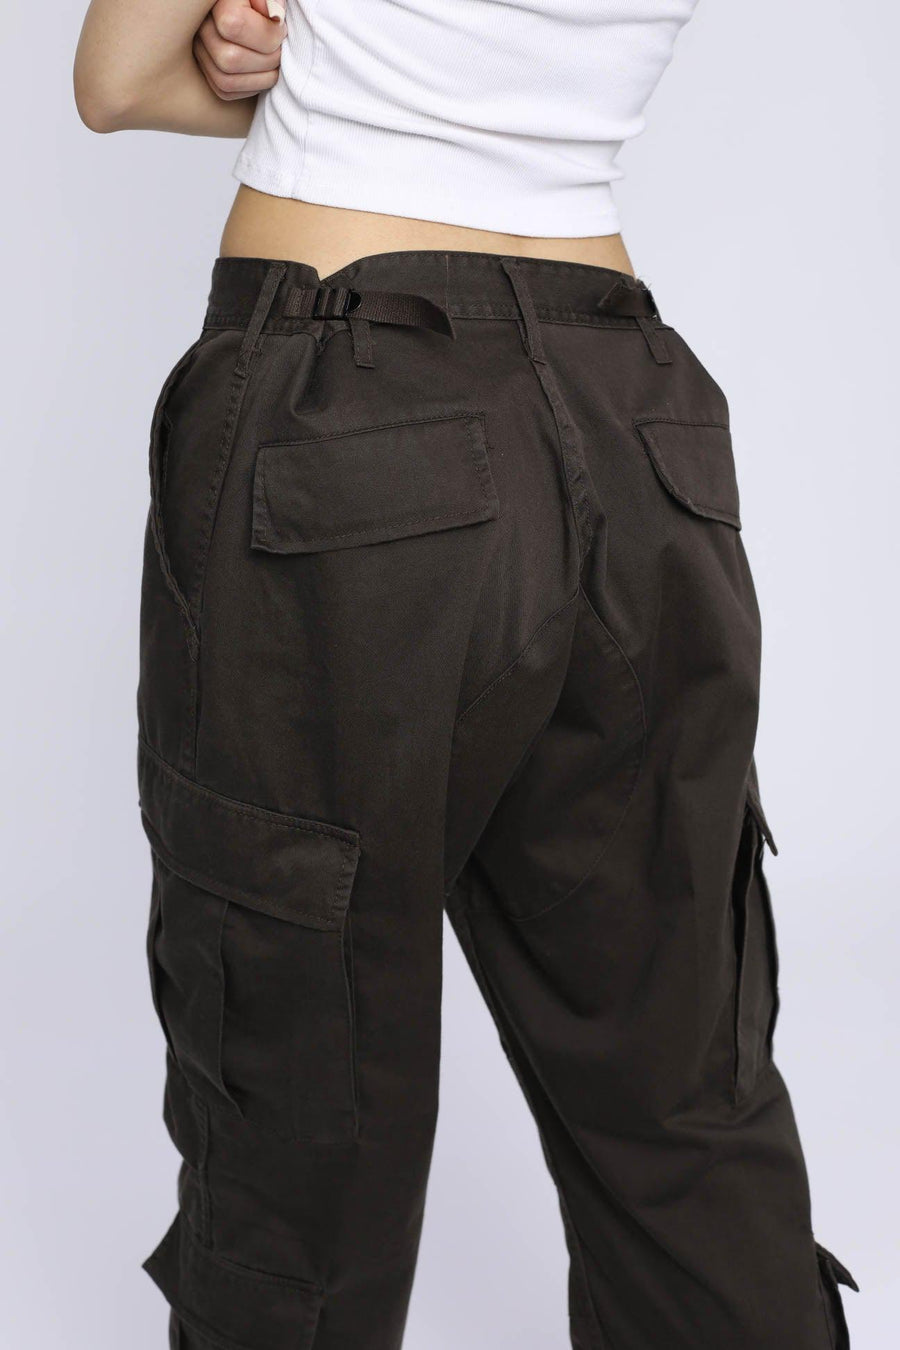 Brown BDU Pants - L